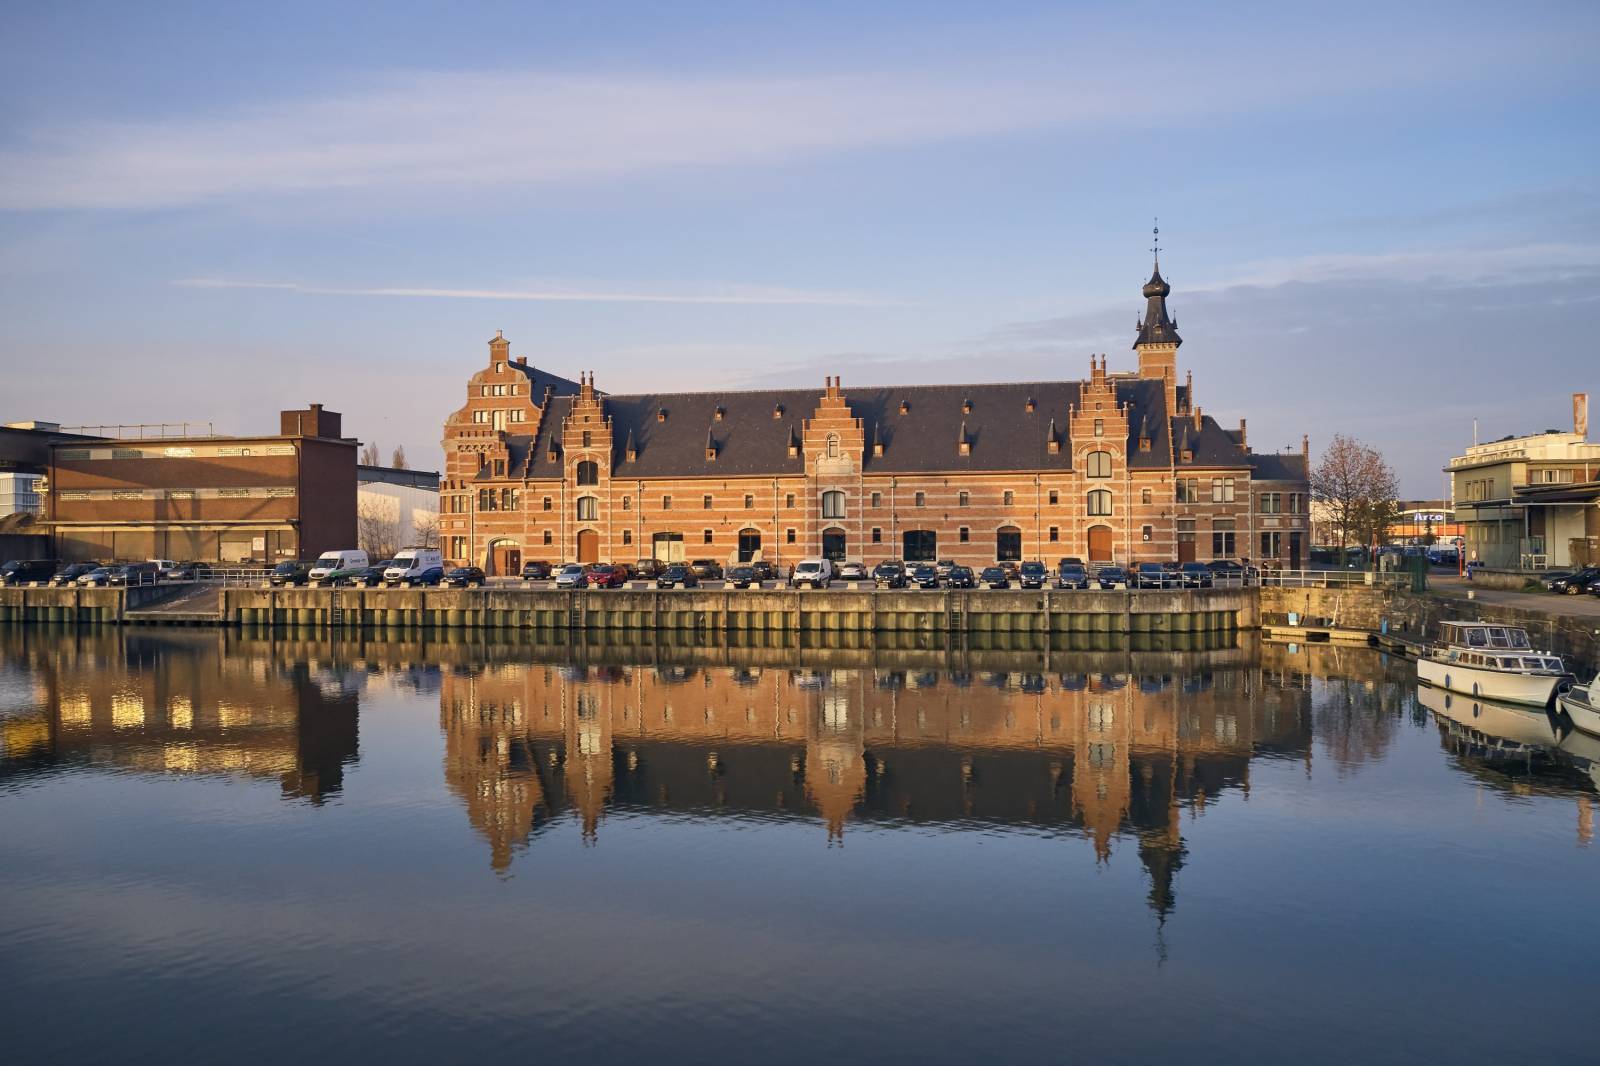 Feestzaal - Van der Valk hotel Mechelen - House of Events (11)